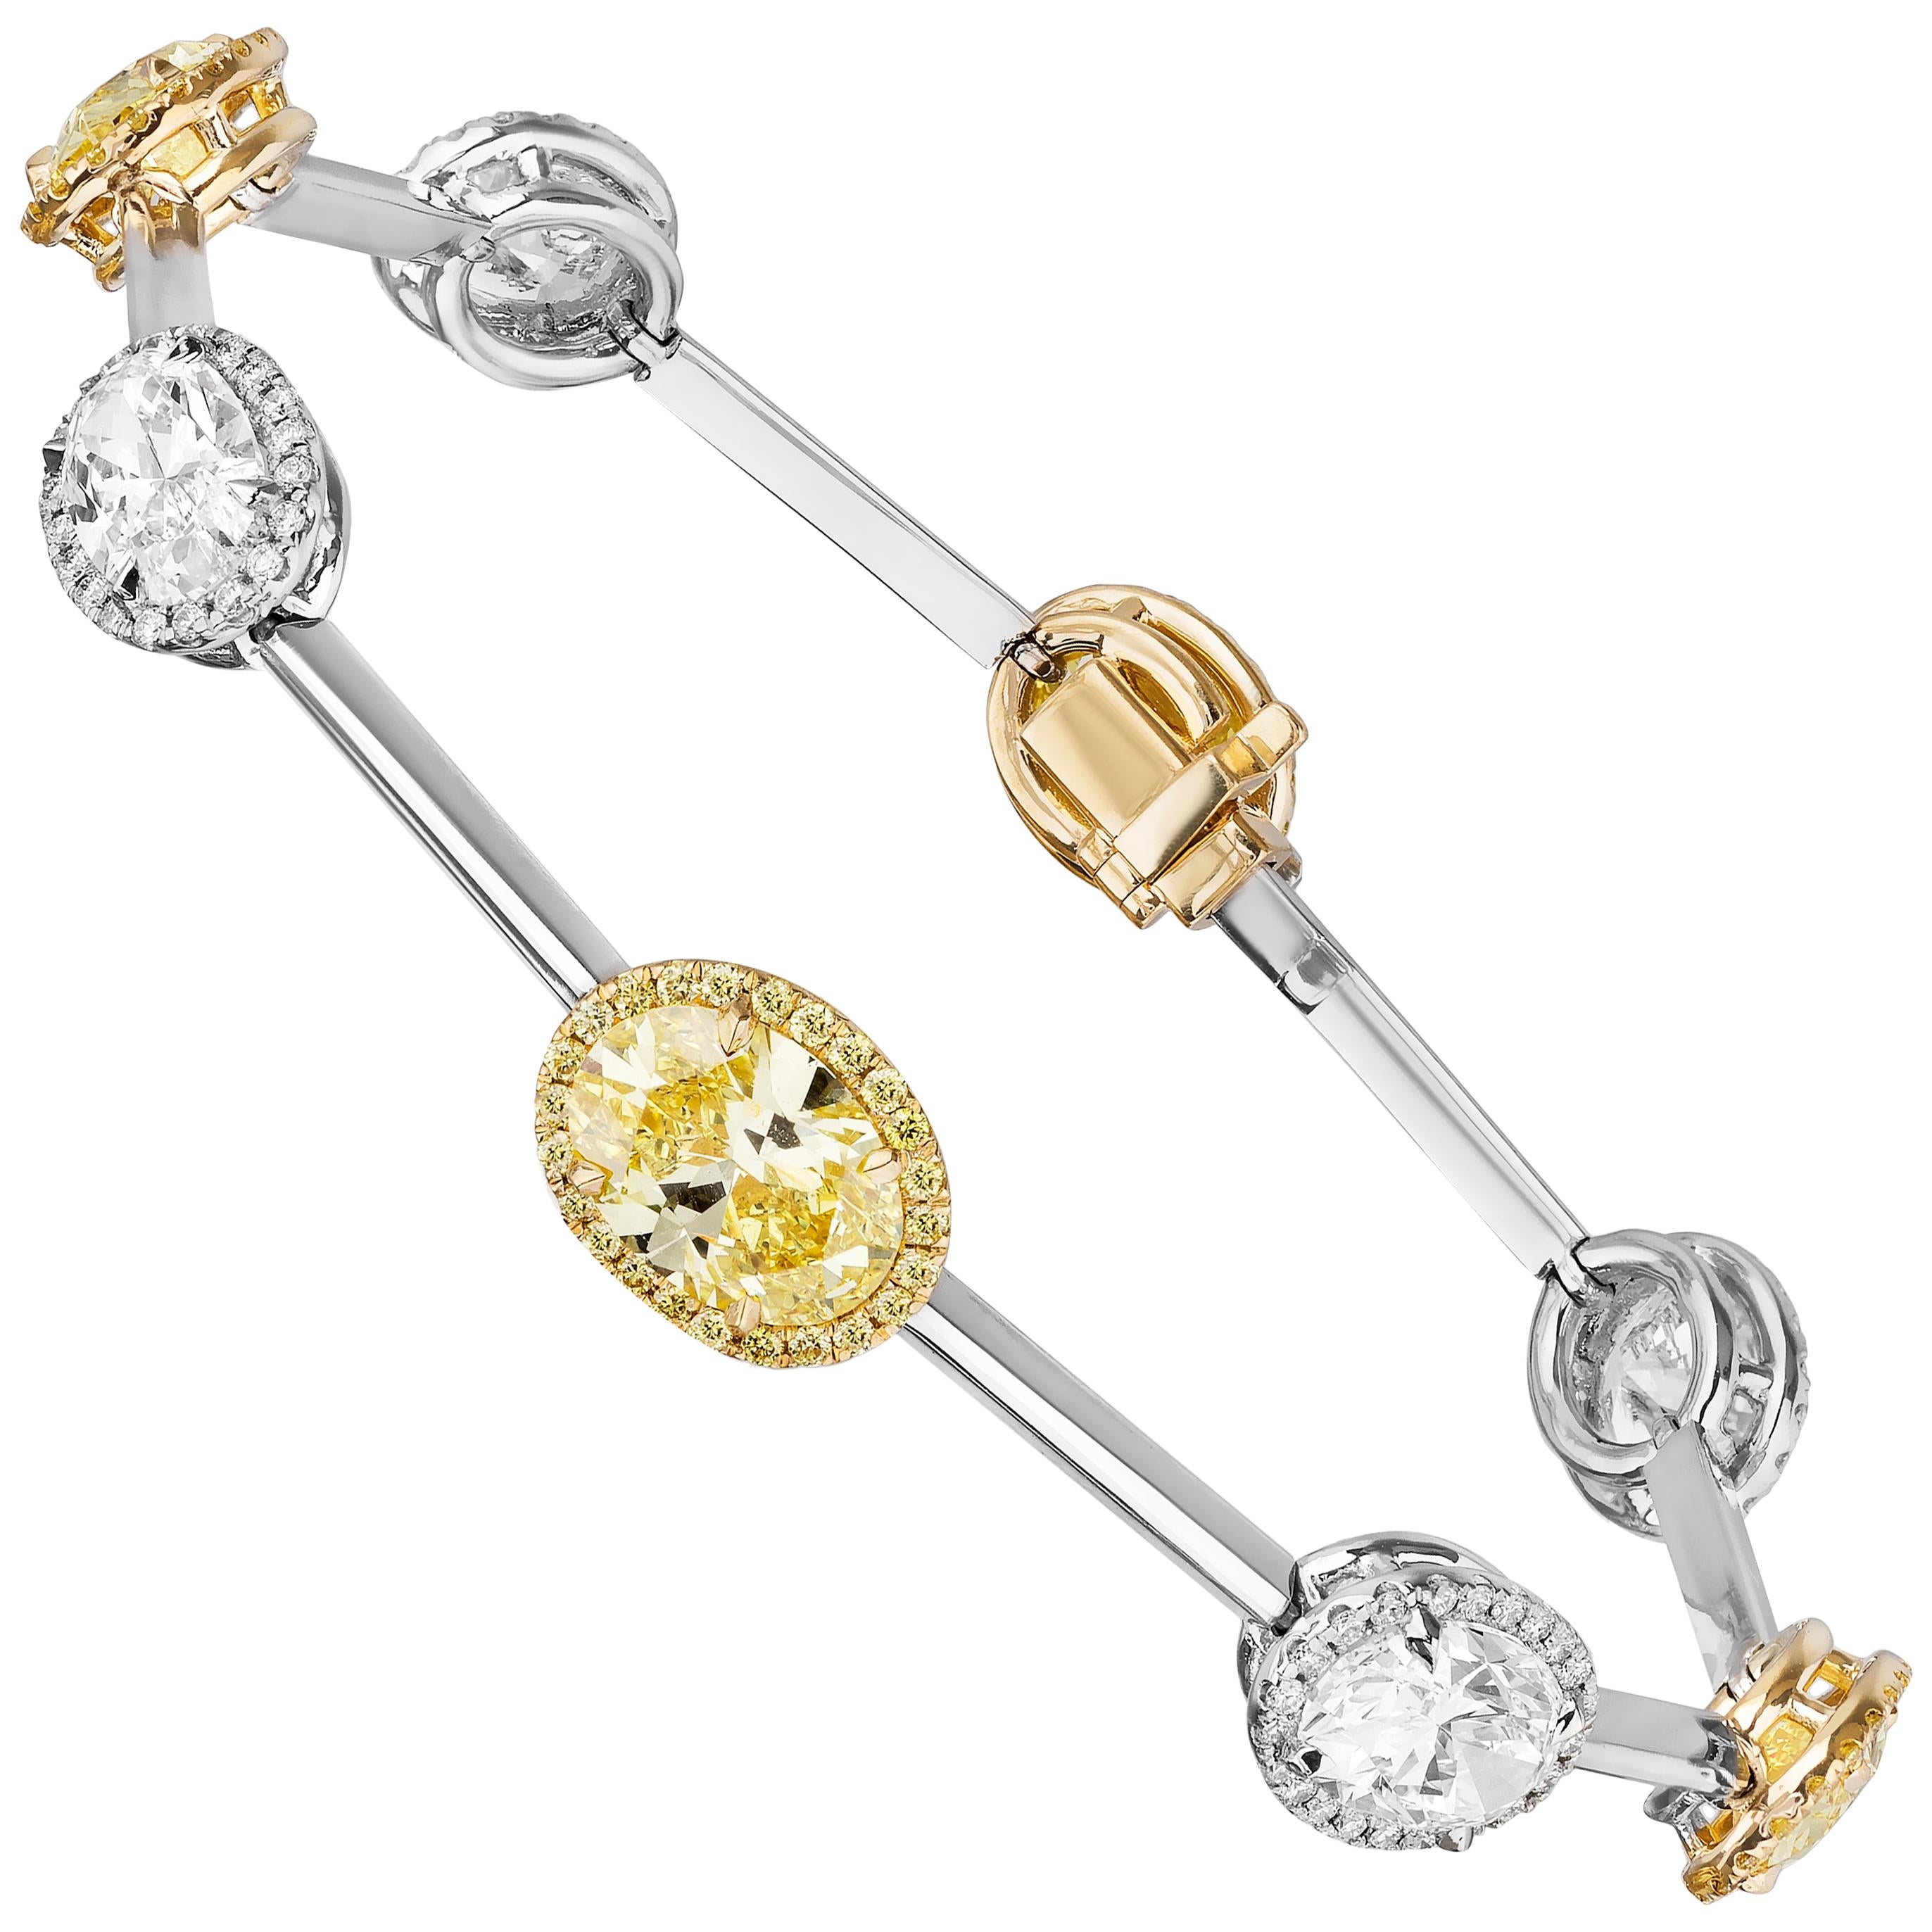 GIA Certified 7.61 Carat Fancy Yellow and White Oval Diamond Bracelet